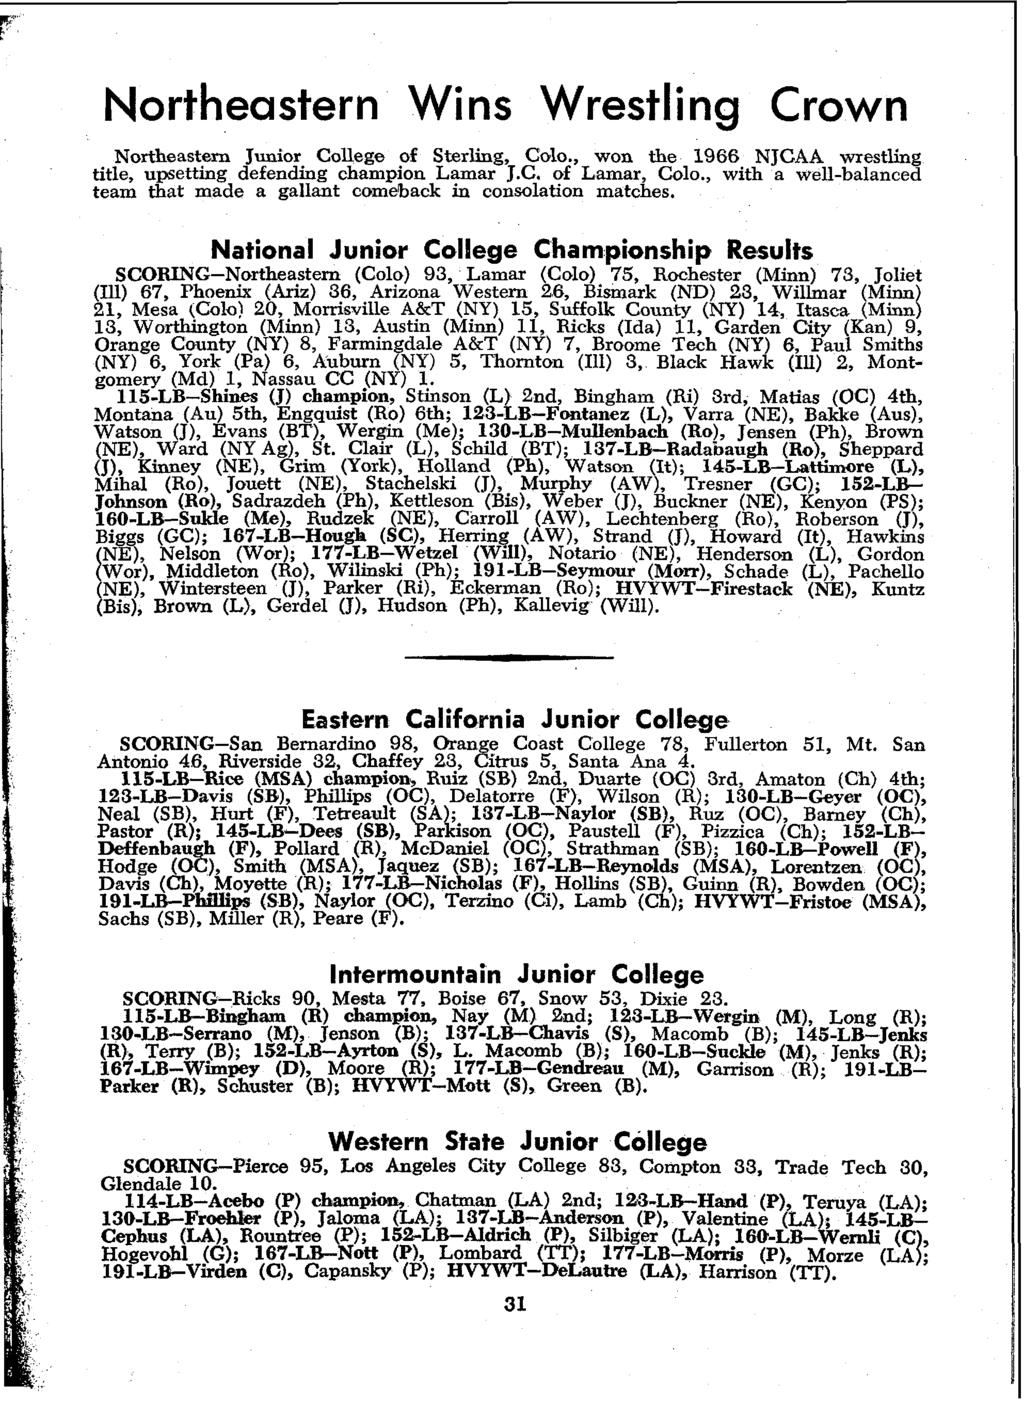 Northeastern Wins Wrestling Crown Northeastern Junior College of Sterling, Cdo., won the 1966 NJCAA wrestling title, upsetting defending champion Lamar J.C. of Lamar, Colo.